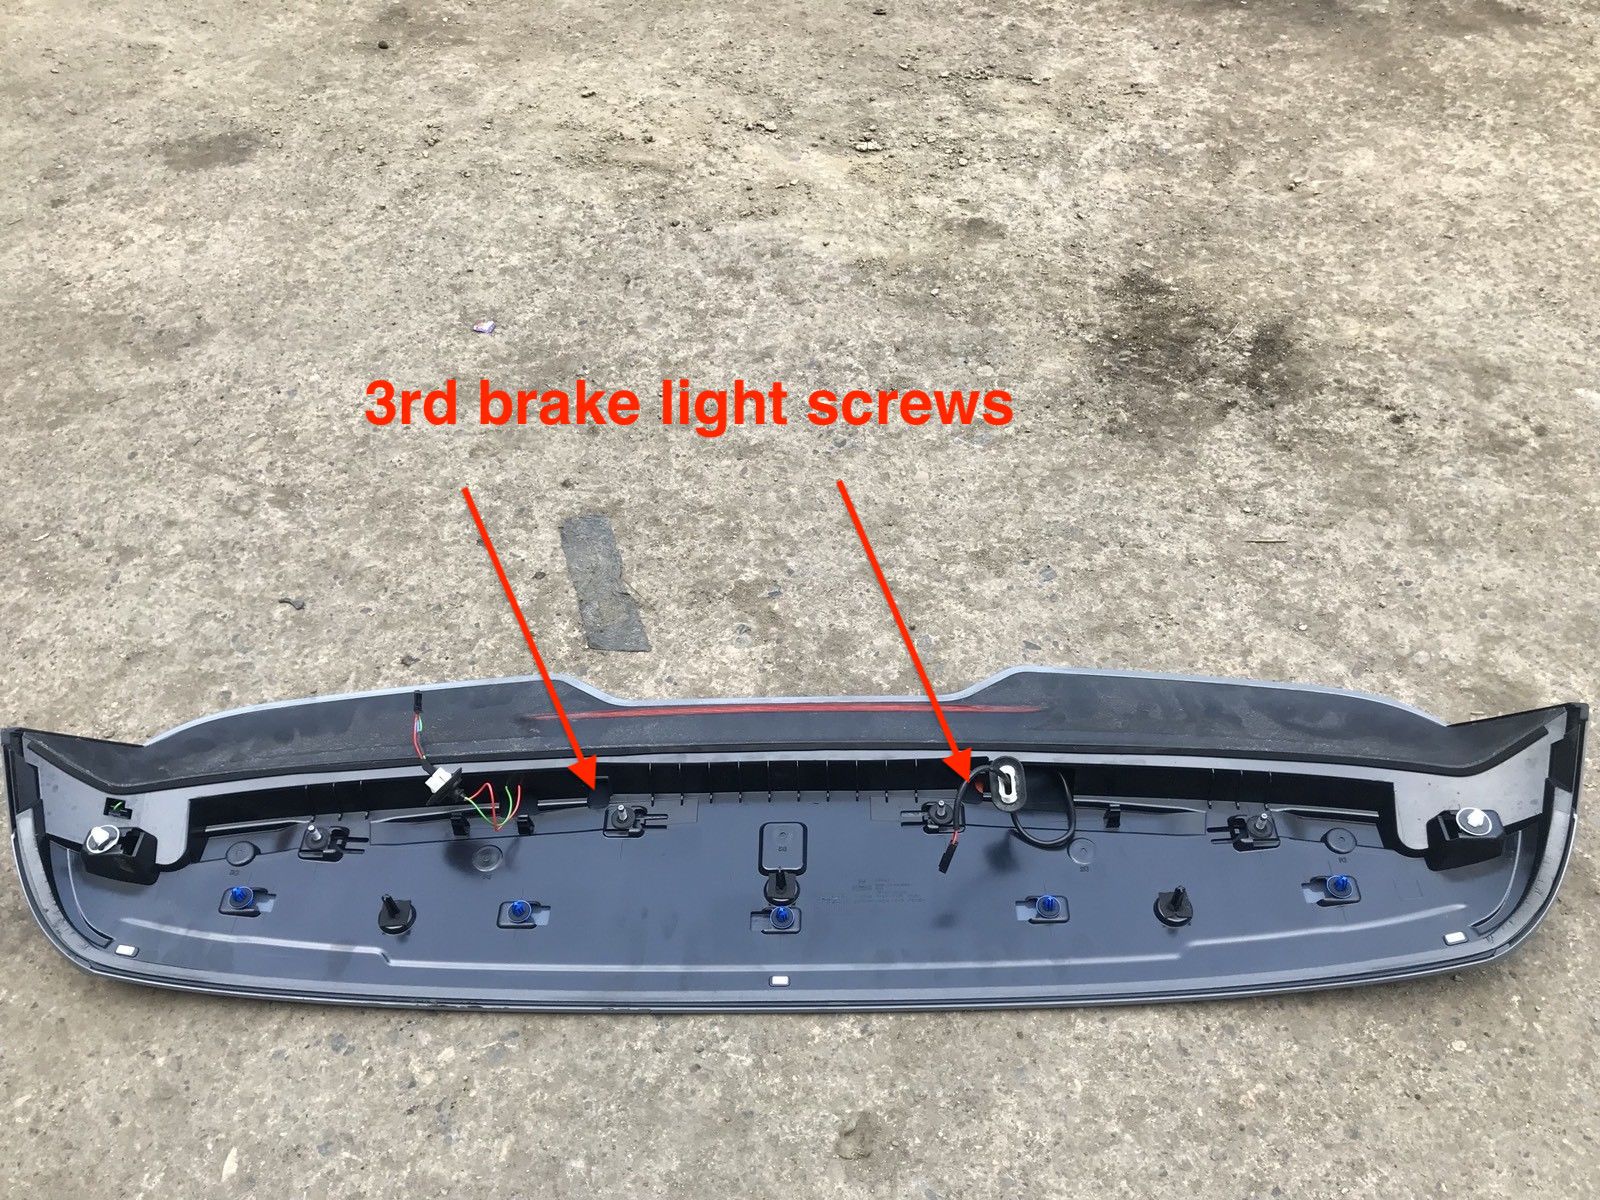 3rd brake light screws